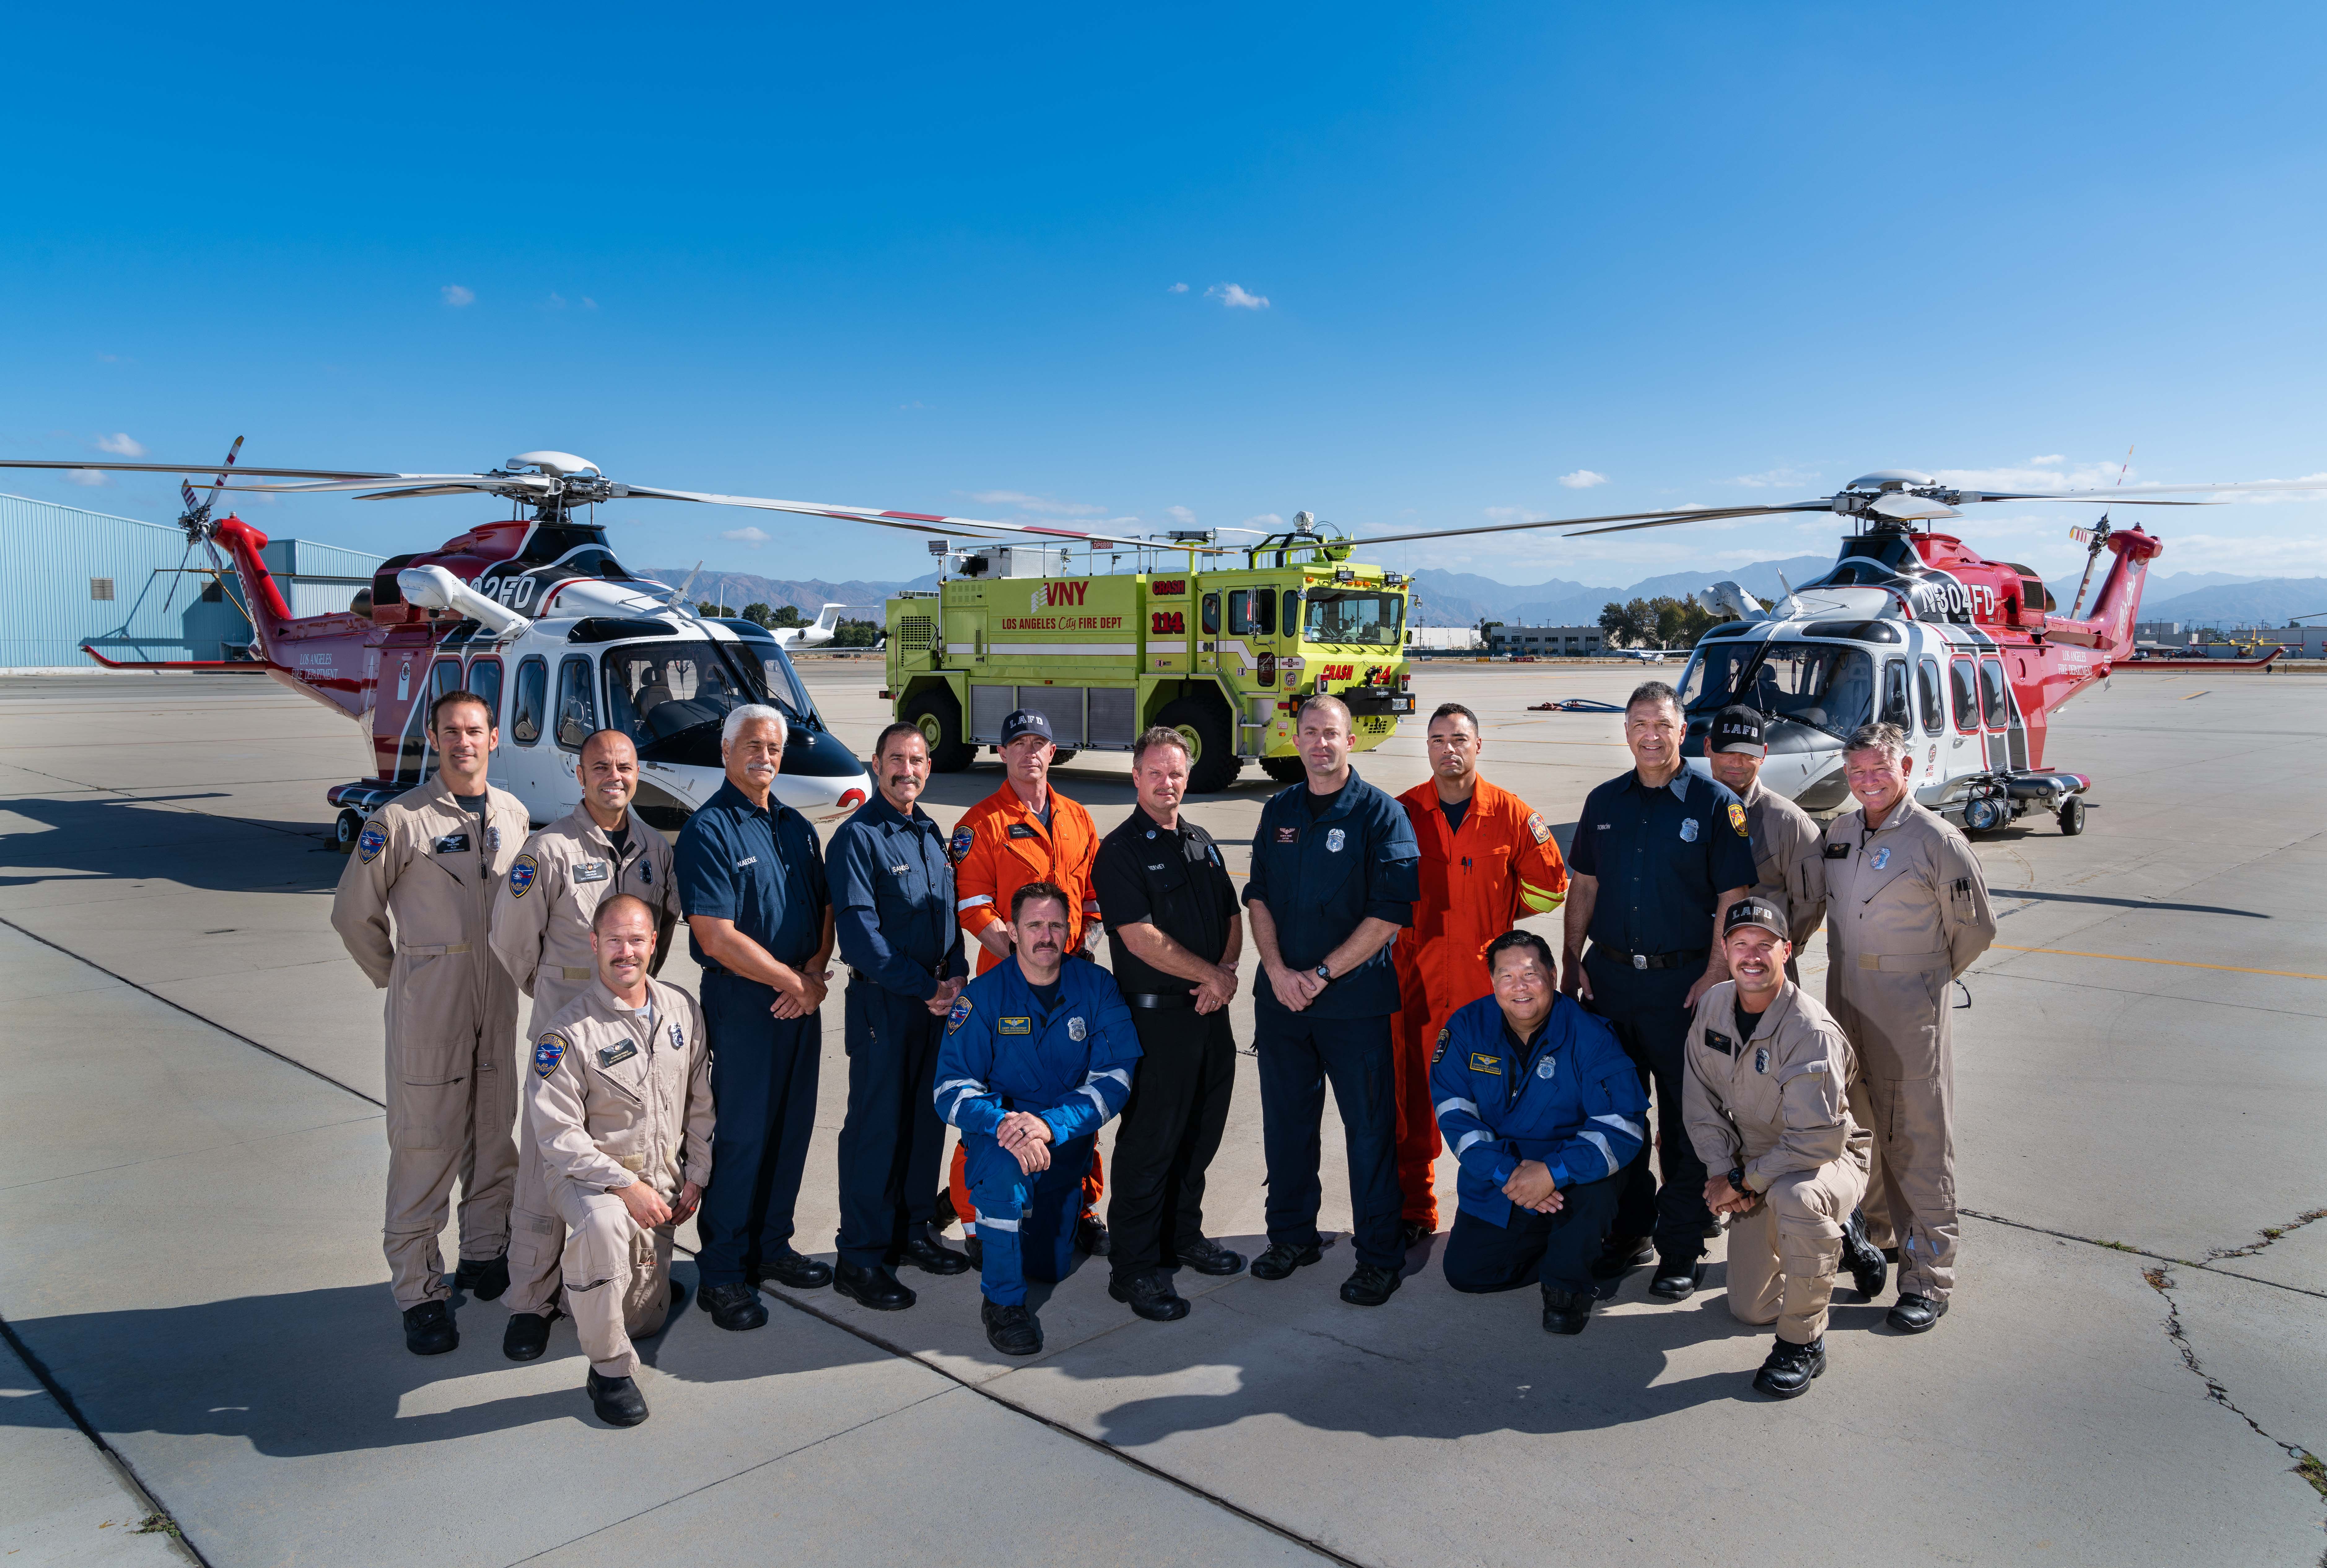 Air operation. LAFD Air ops. Спасатели на вертолетах Лос Анджелес. Пожарные NY Air ops. Los Angeles Fire Department Air Operations.